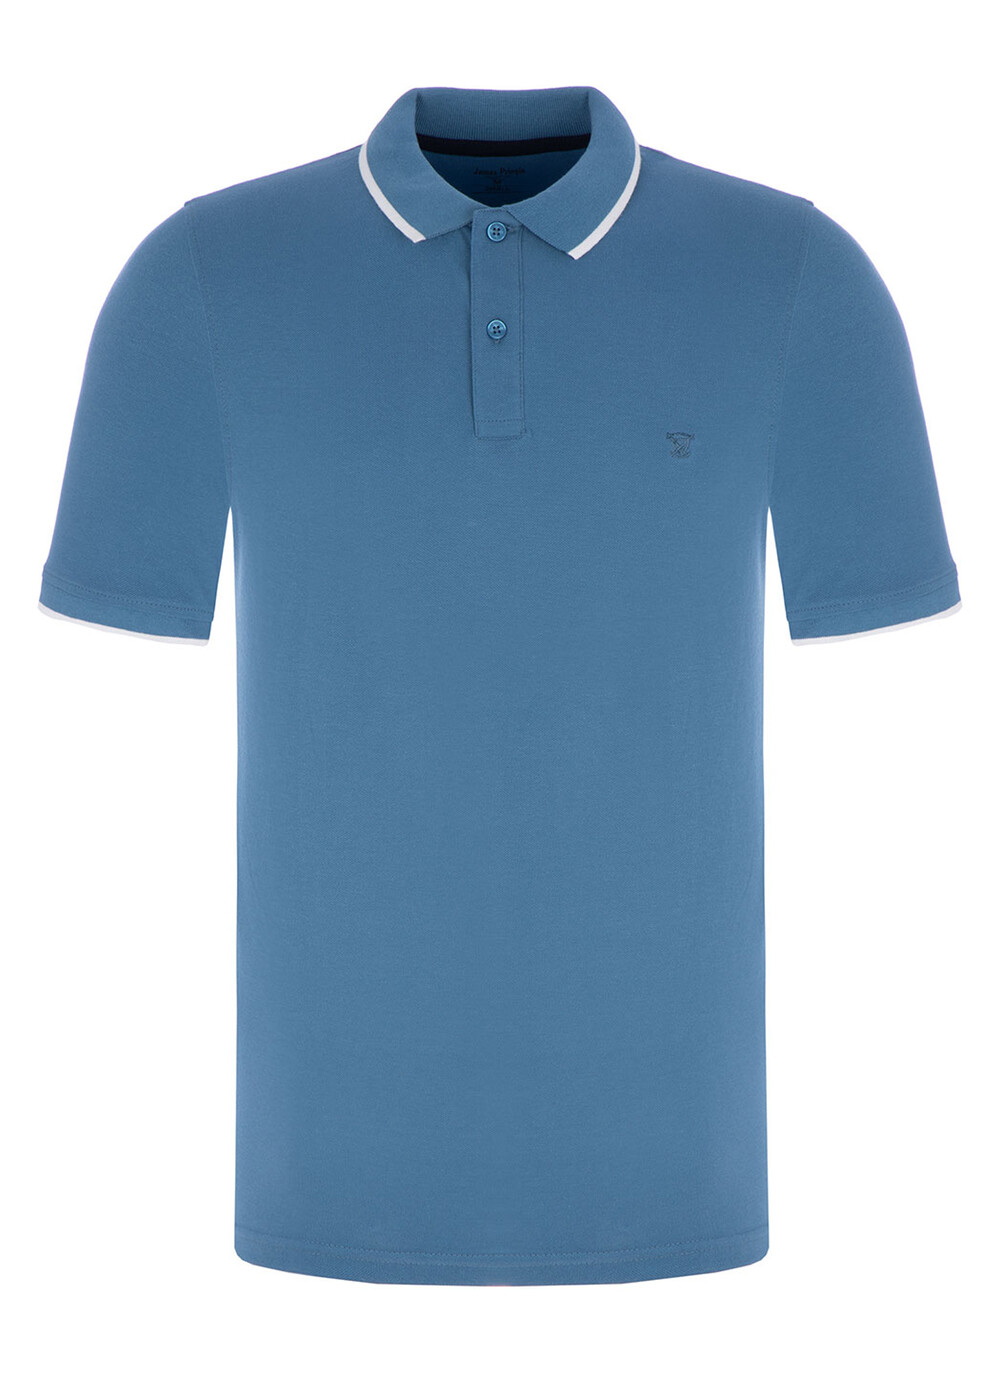 Male James Pringle Polo Shirt | Bright Blue | EWM | The Edinburgh ...